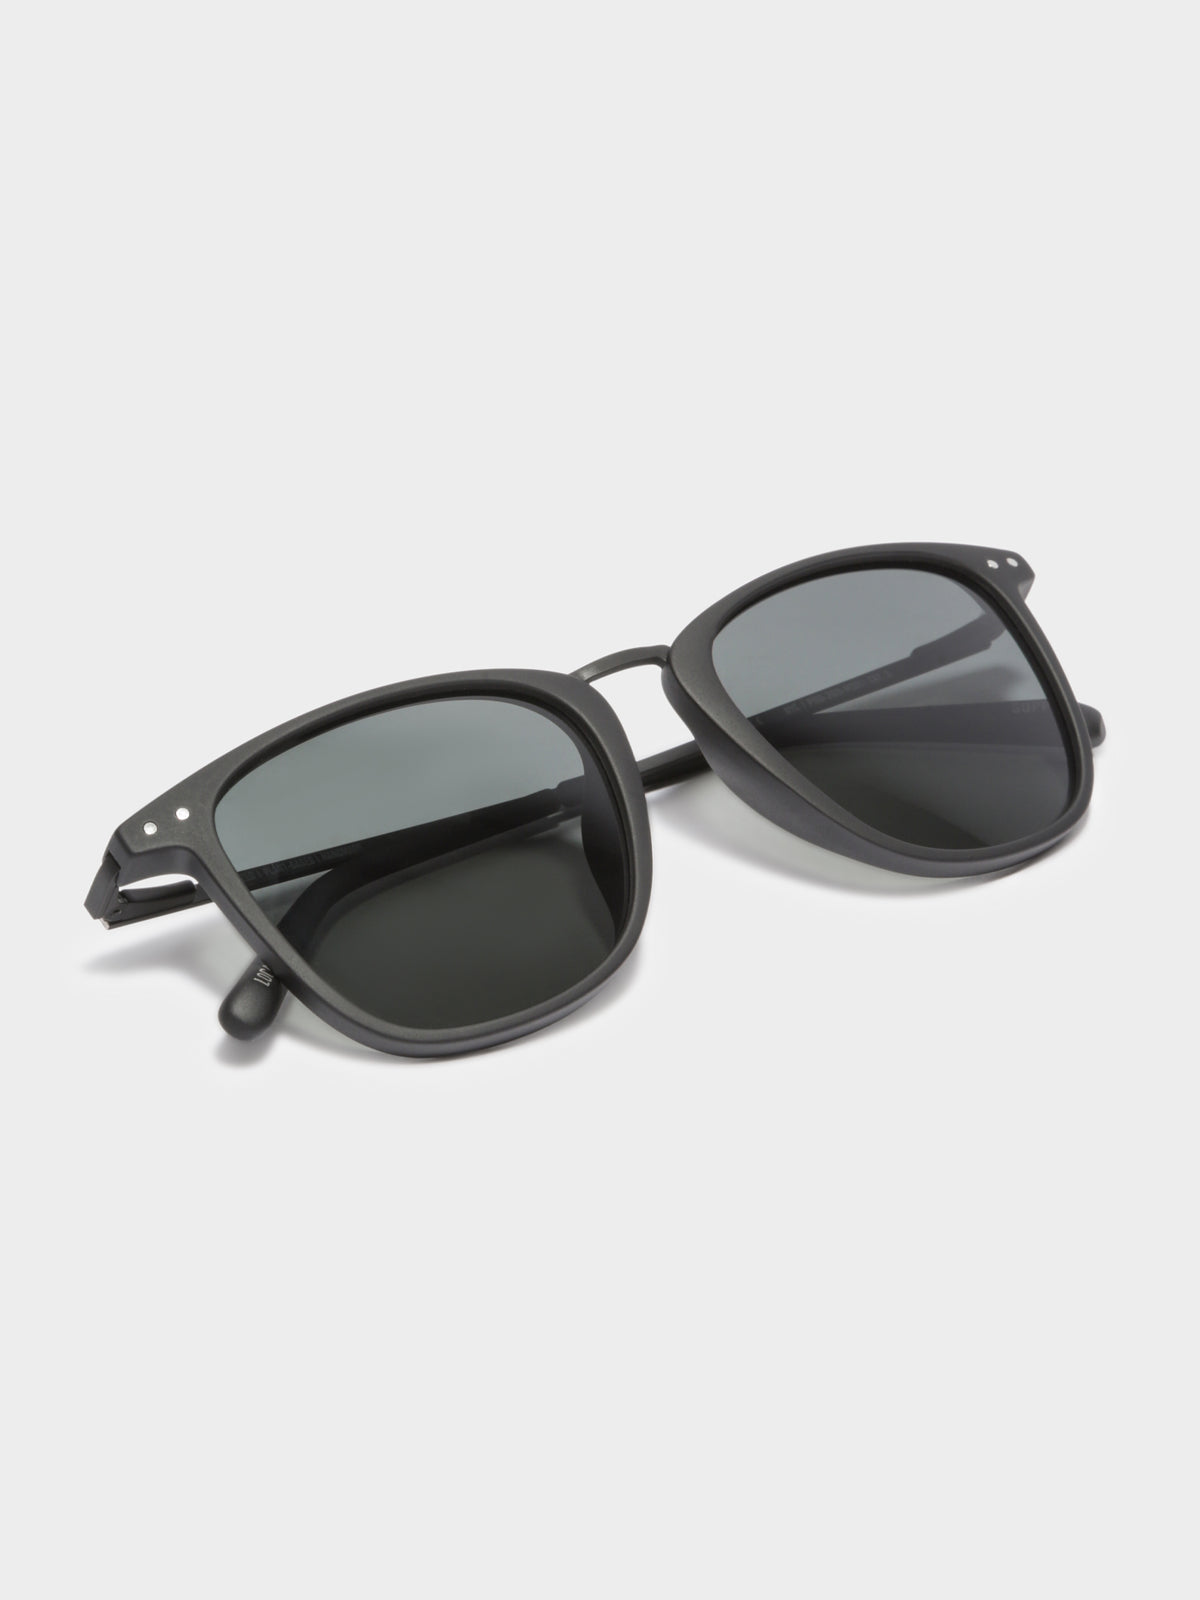 NYC Sunglasses in Matte Black &amp; Dark Grey